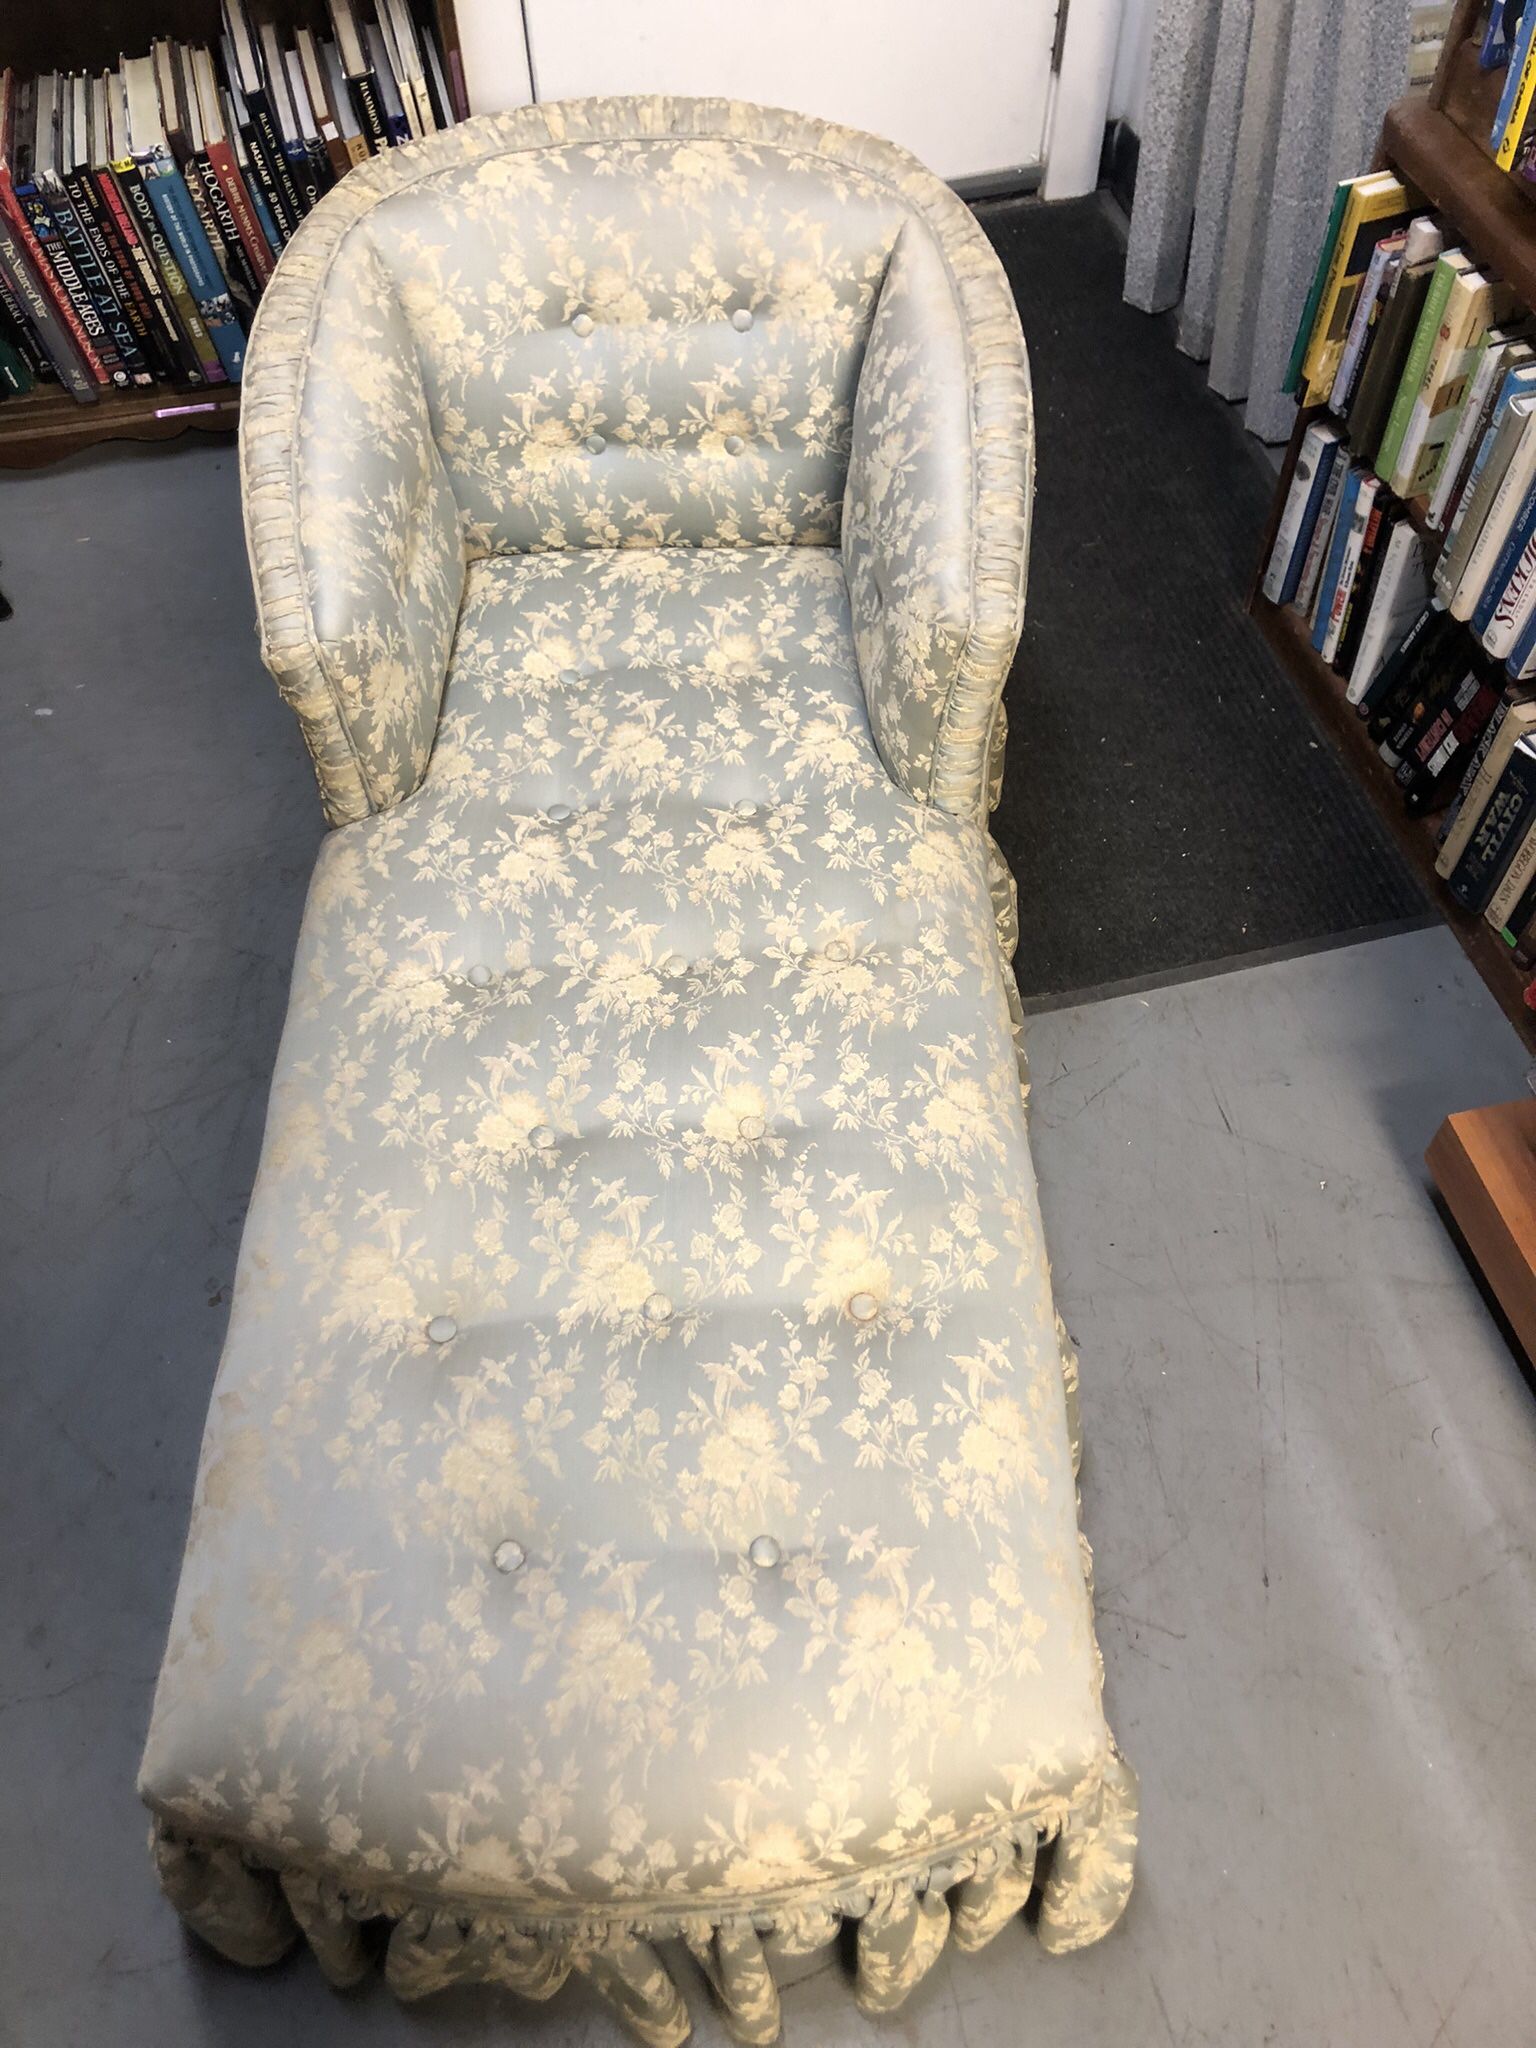 Vintage chaise lounge Sofa